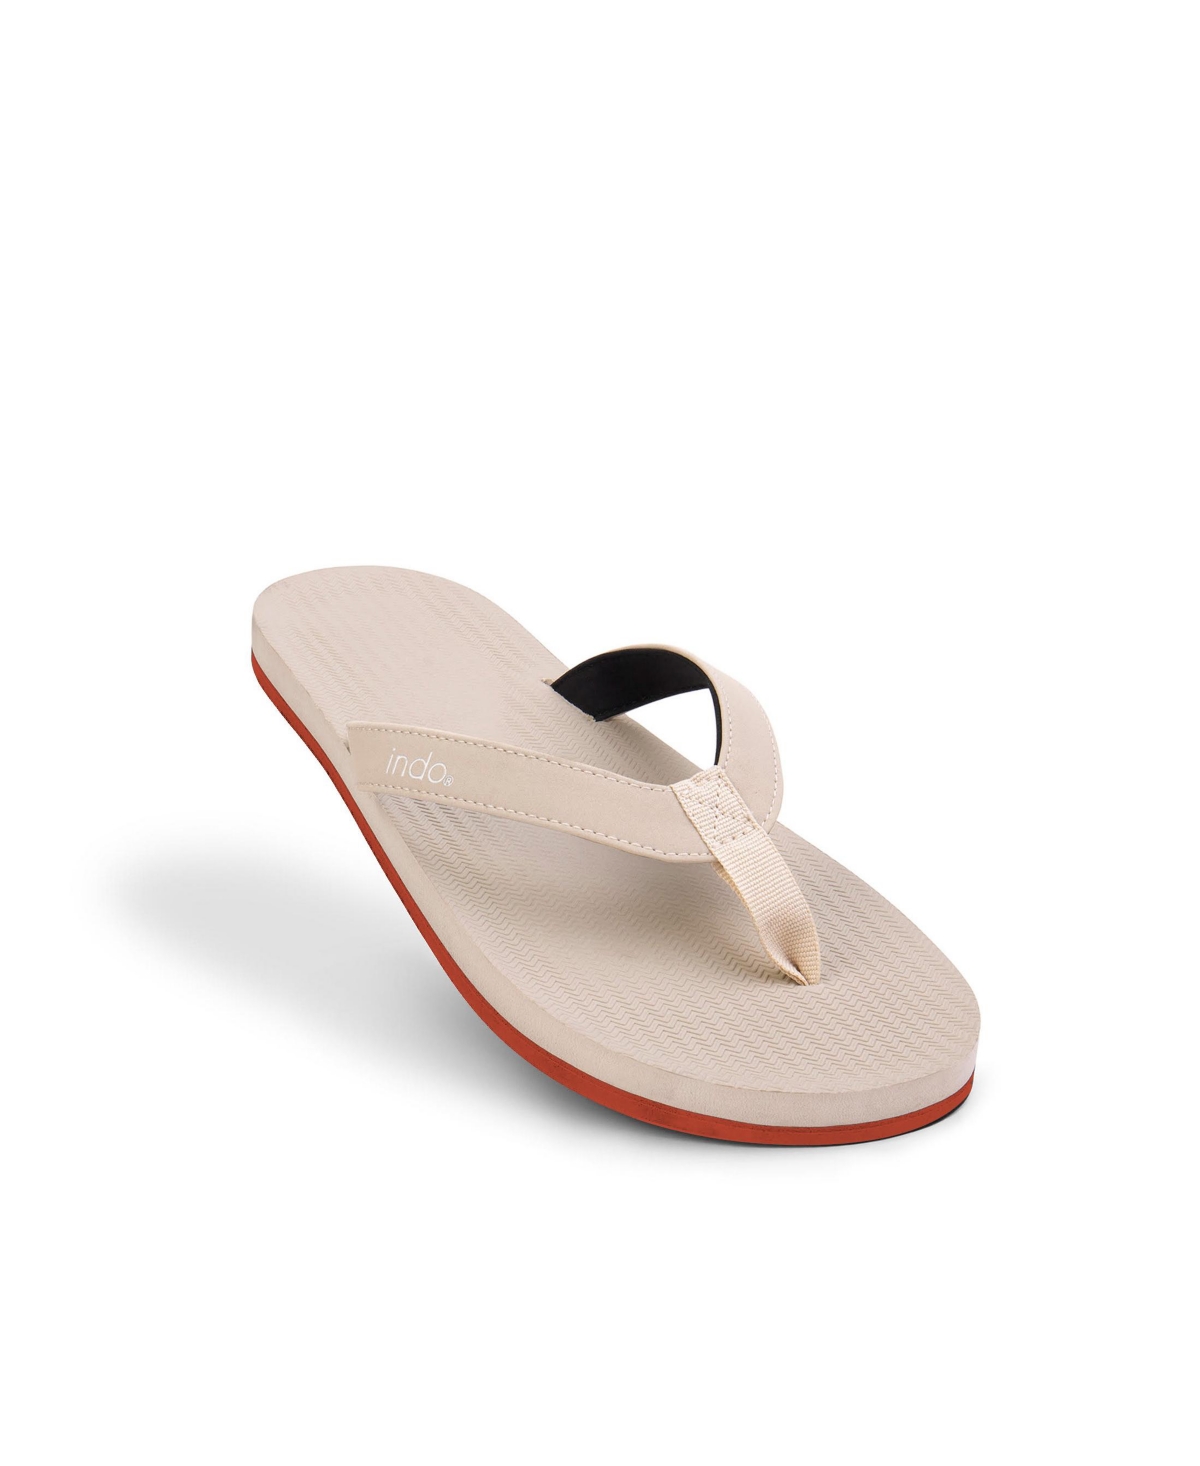 Men's Men s Flip Flops Sneaker Sole - Indigo sole/shore